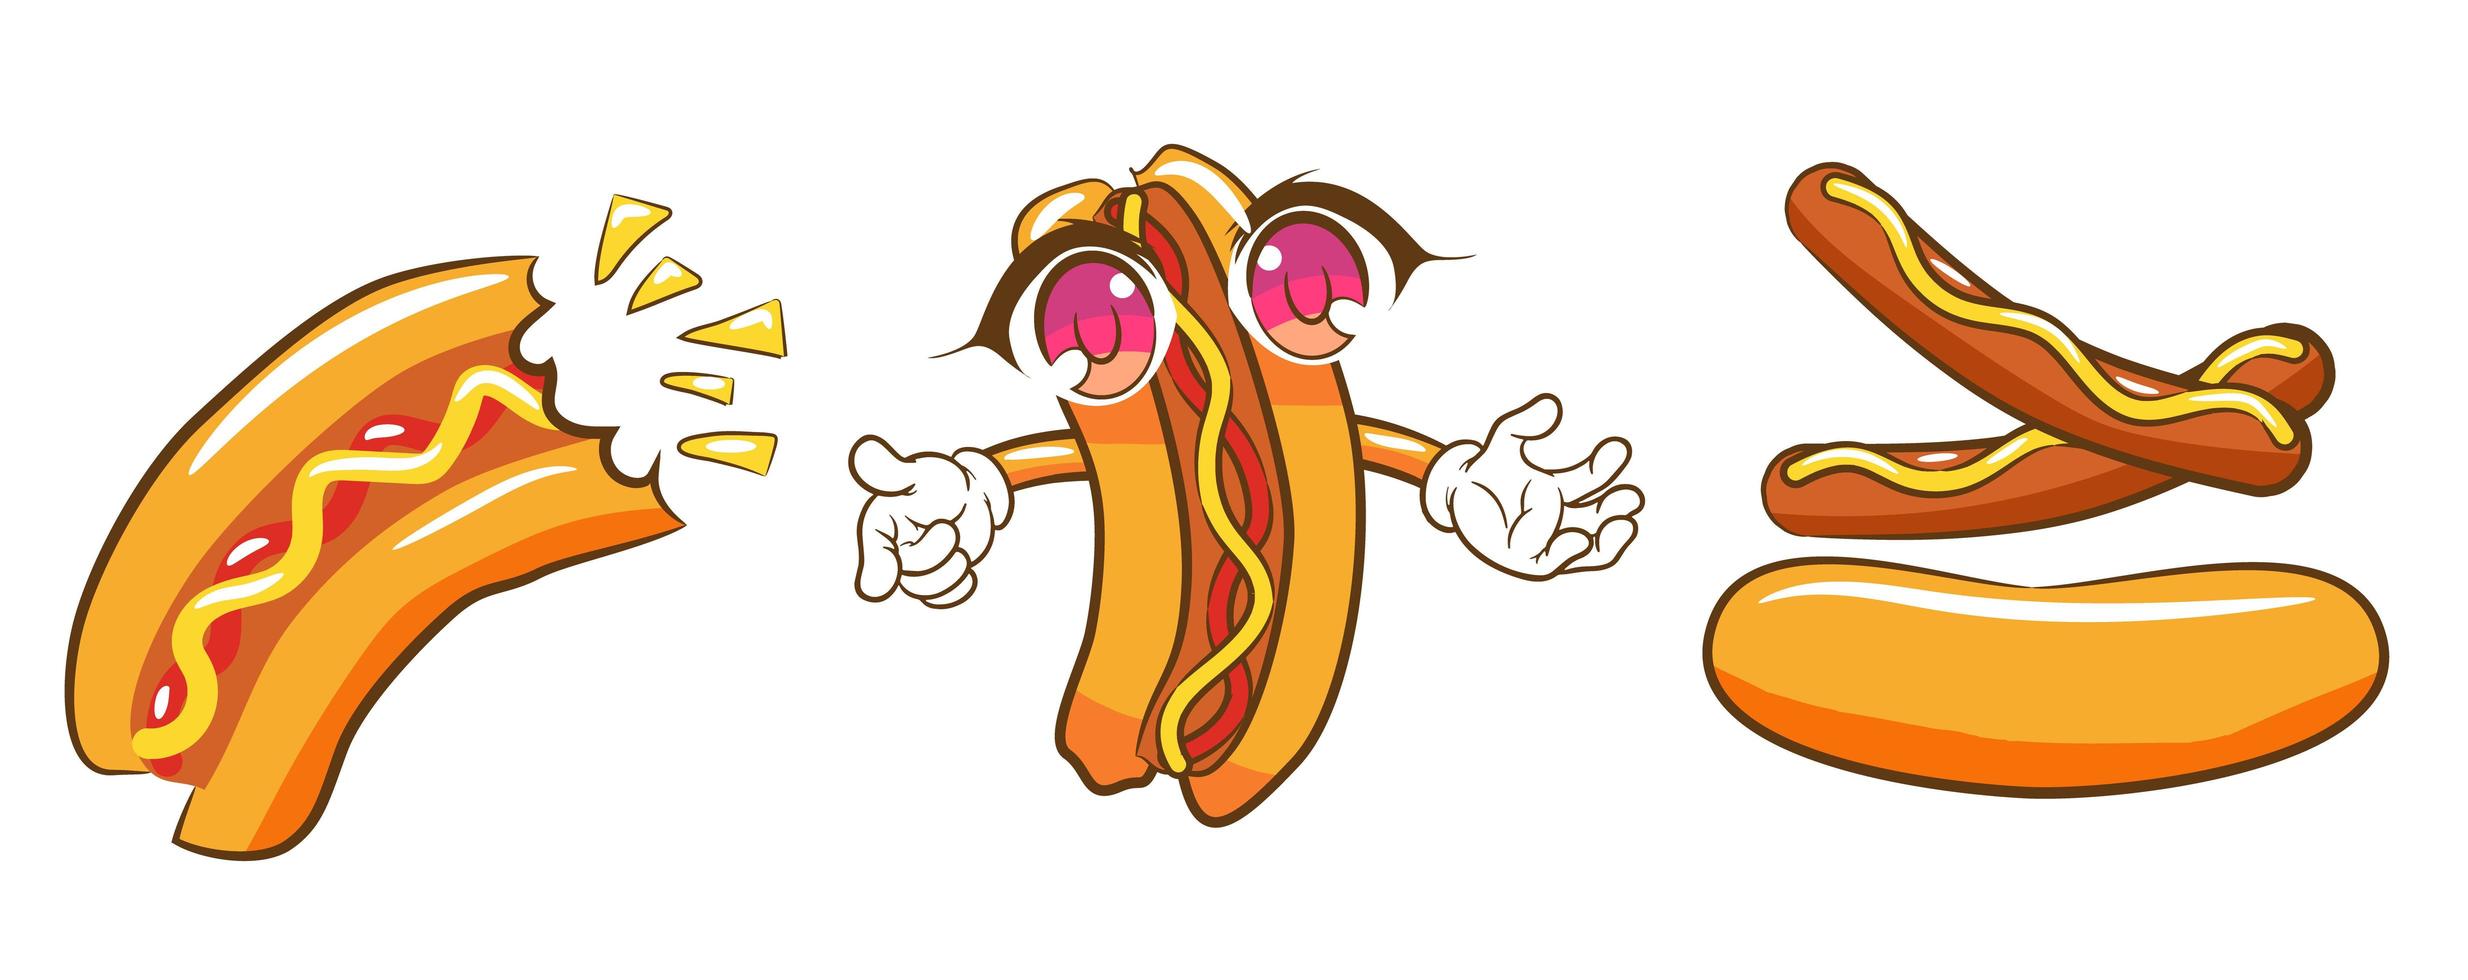 jeu de hot-dog de dessin animé vecteur